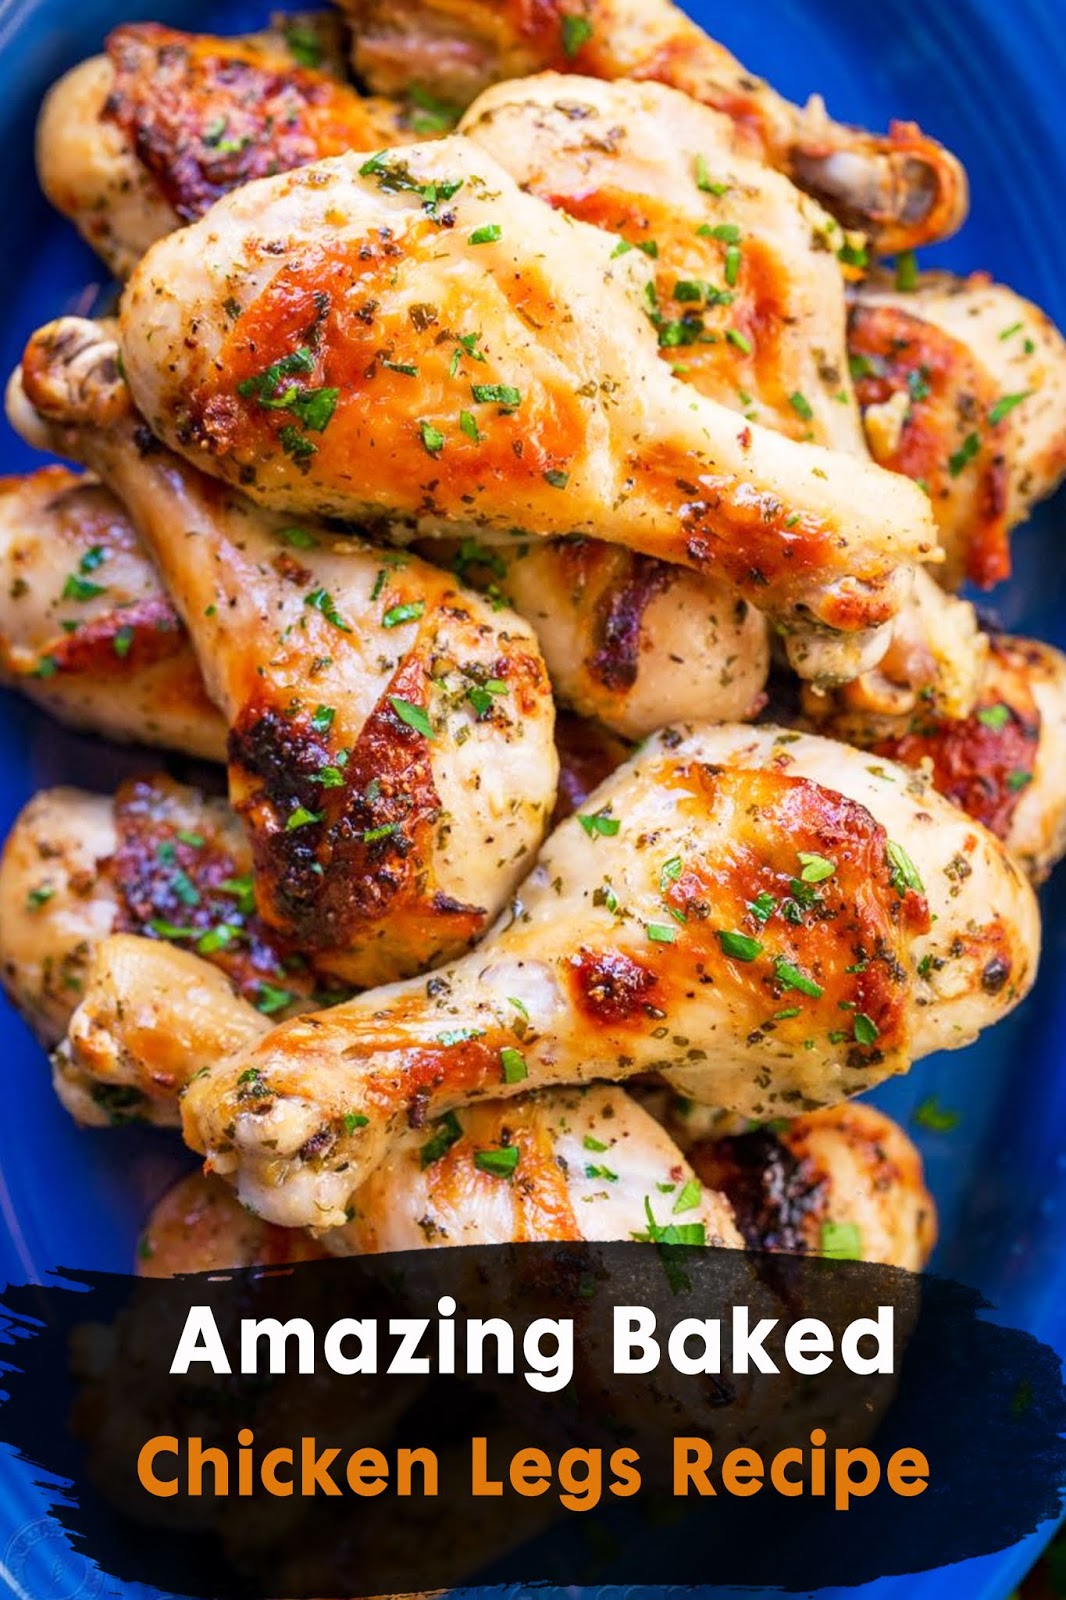 Amazing Baked Chicken Legs Recipe - 3 SECONDS